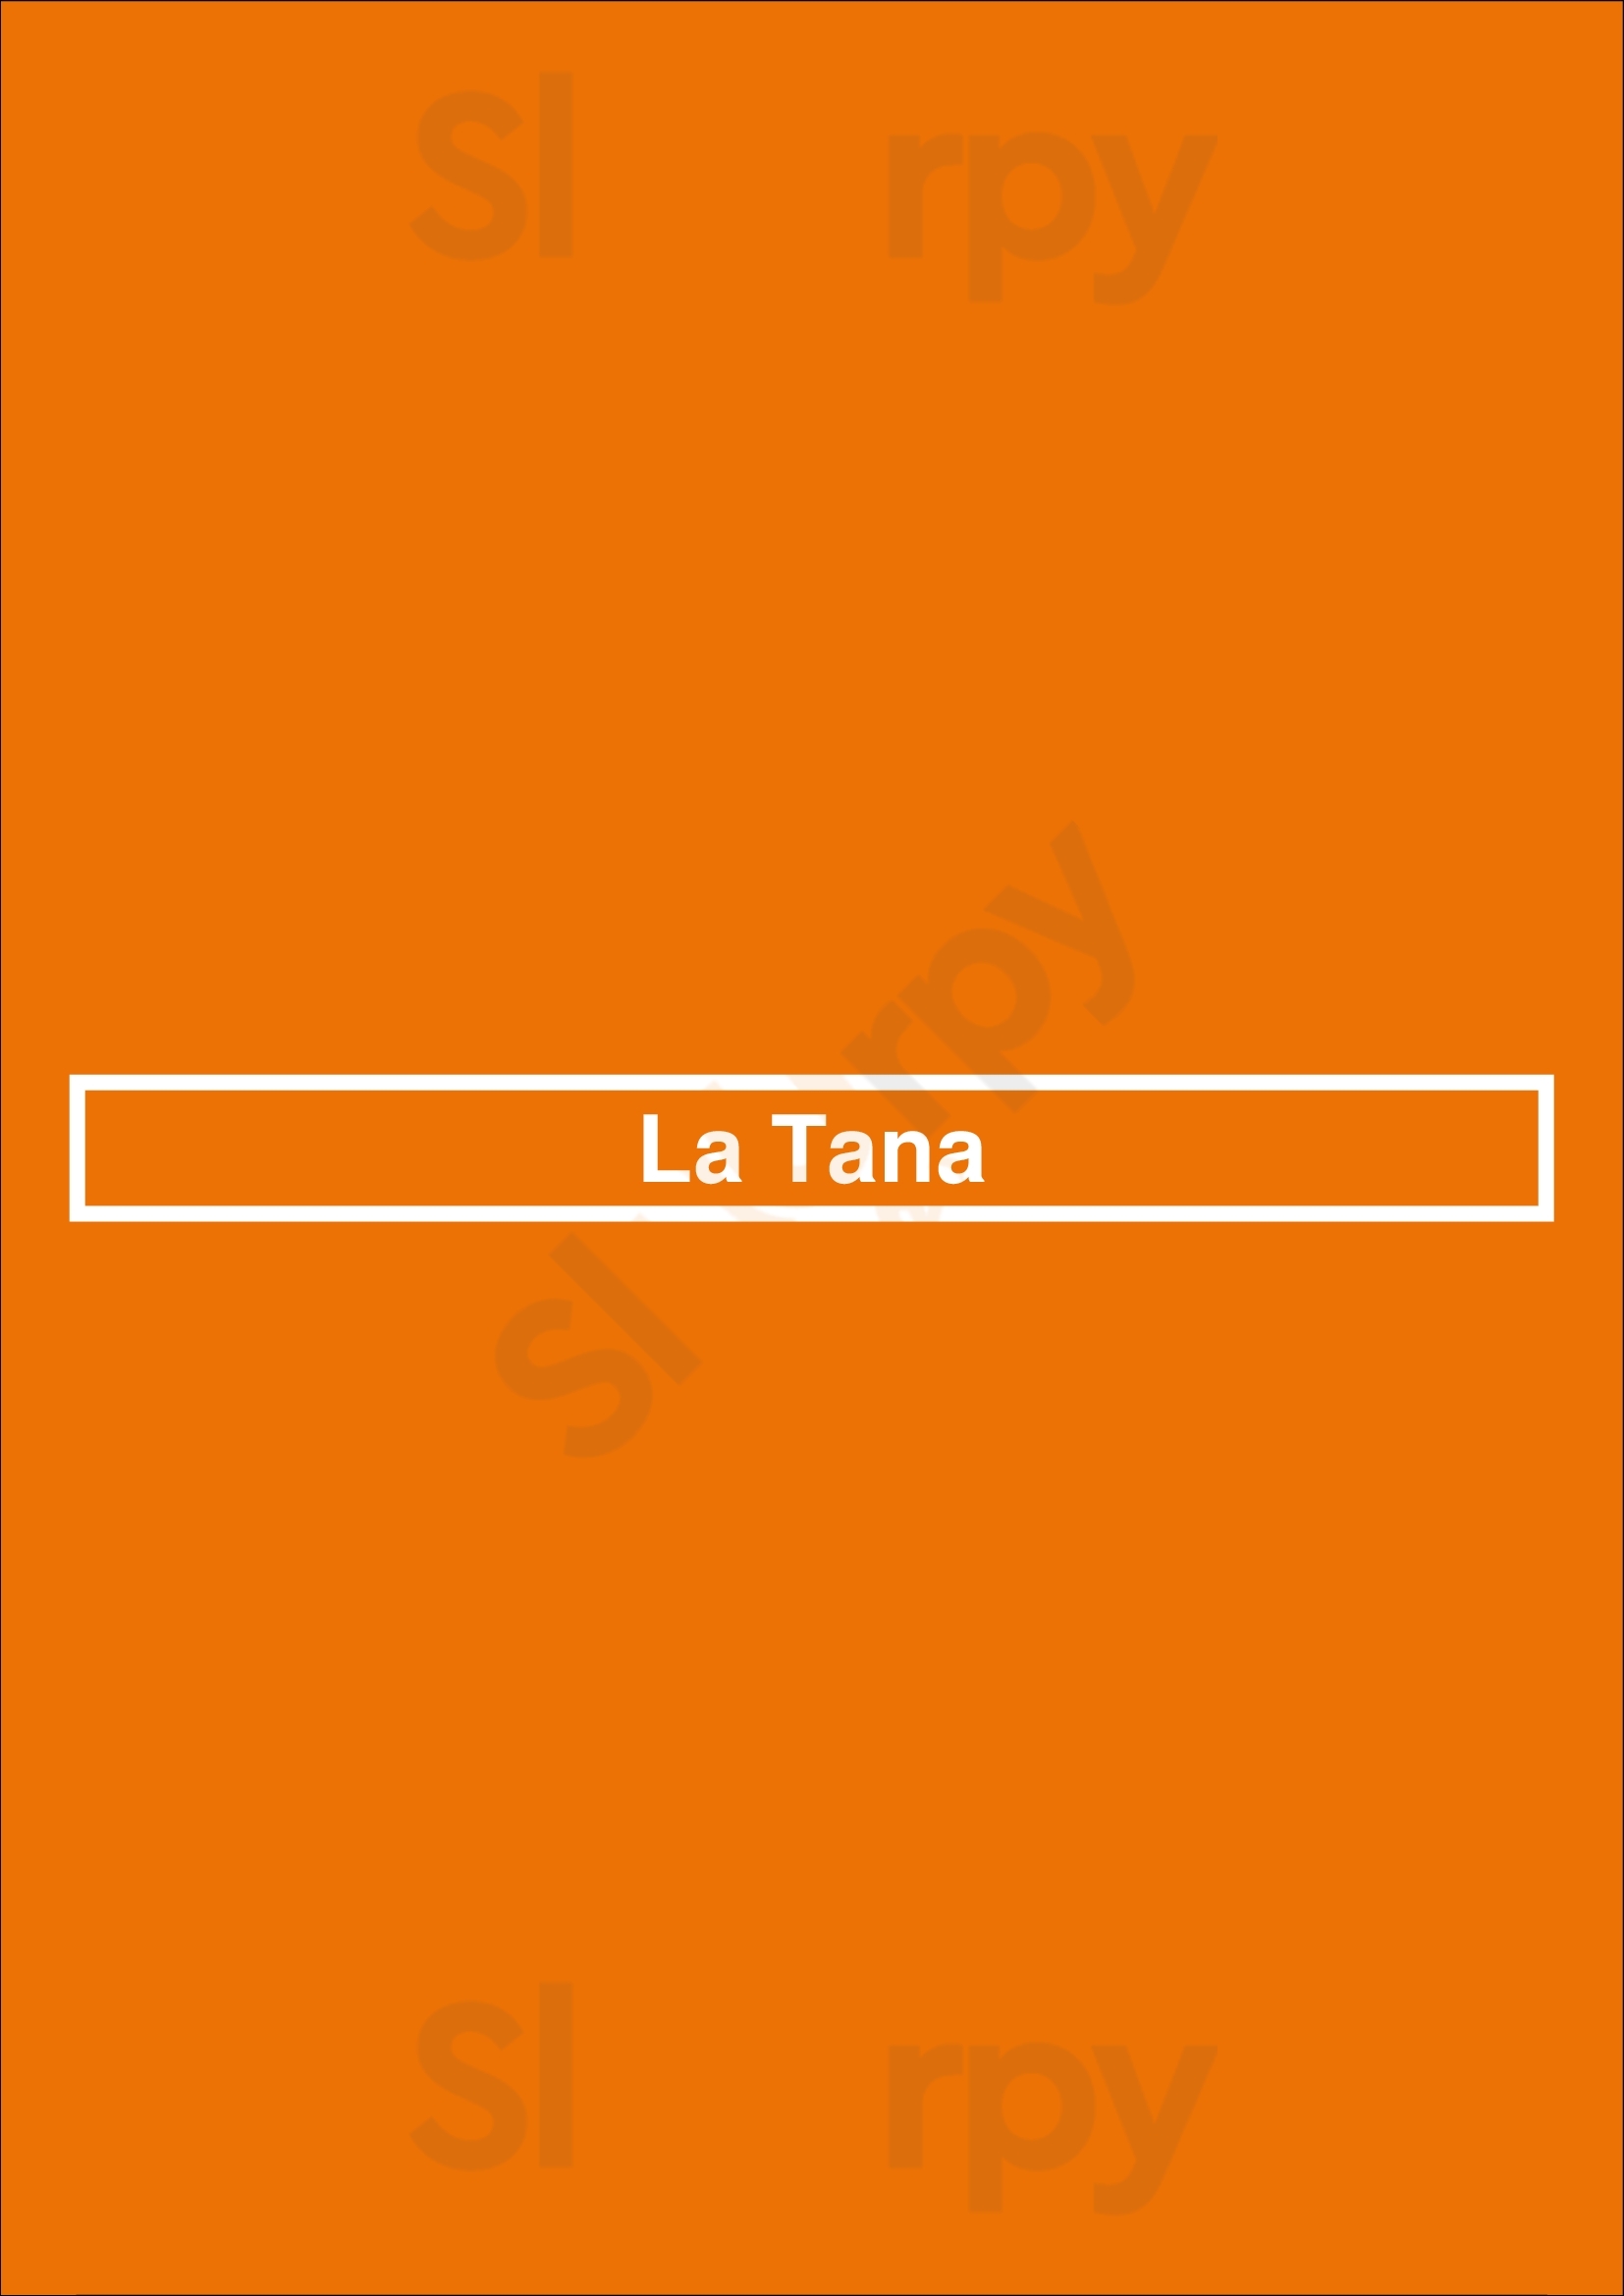 La Tana San Juan Menu - 1